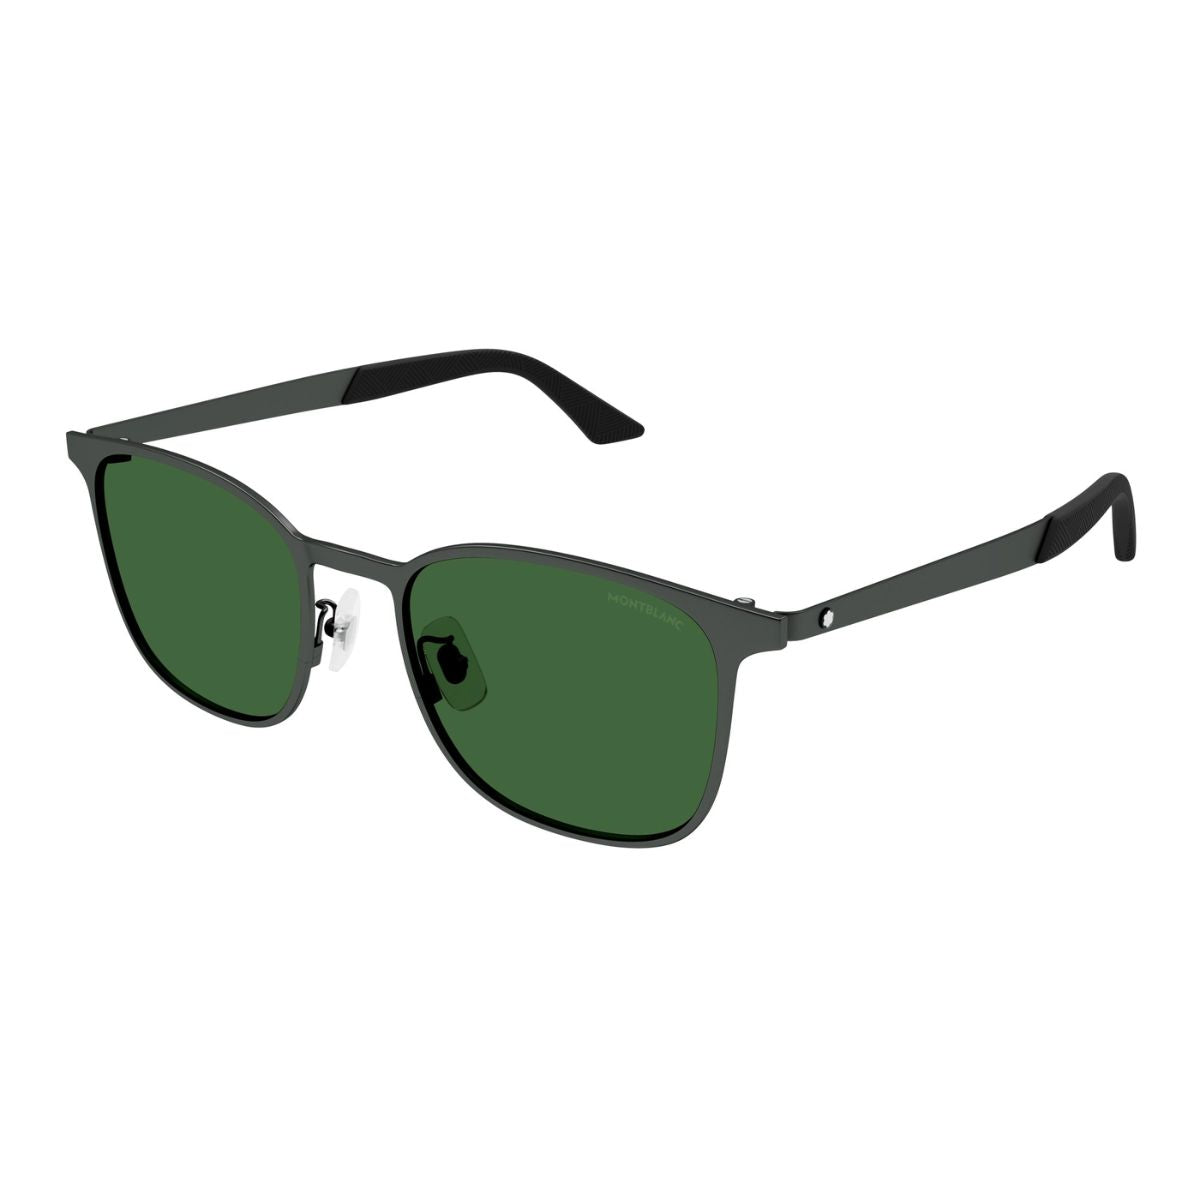 "Buy Stylish Mont Blanc Sunglasses For Mens At Optorium"